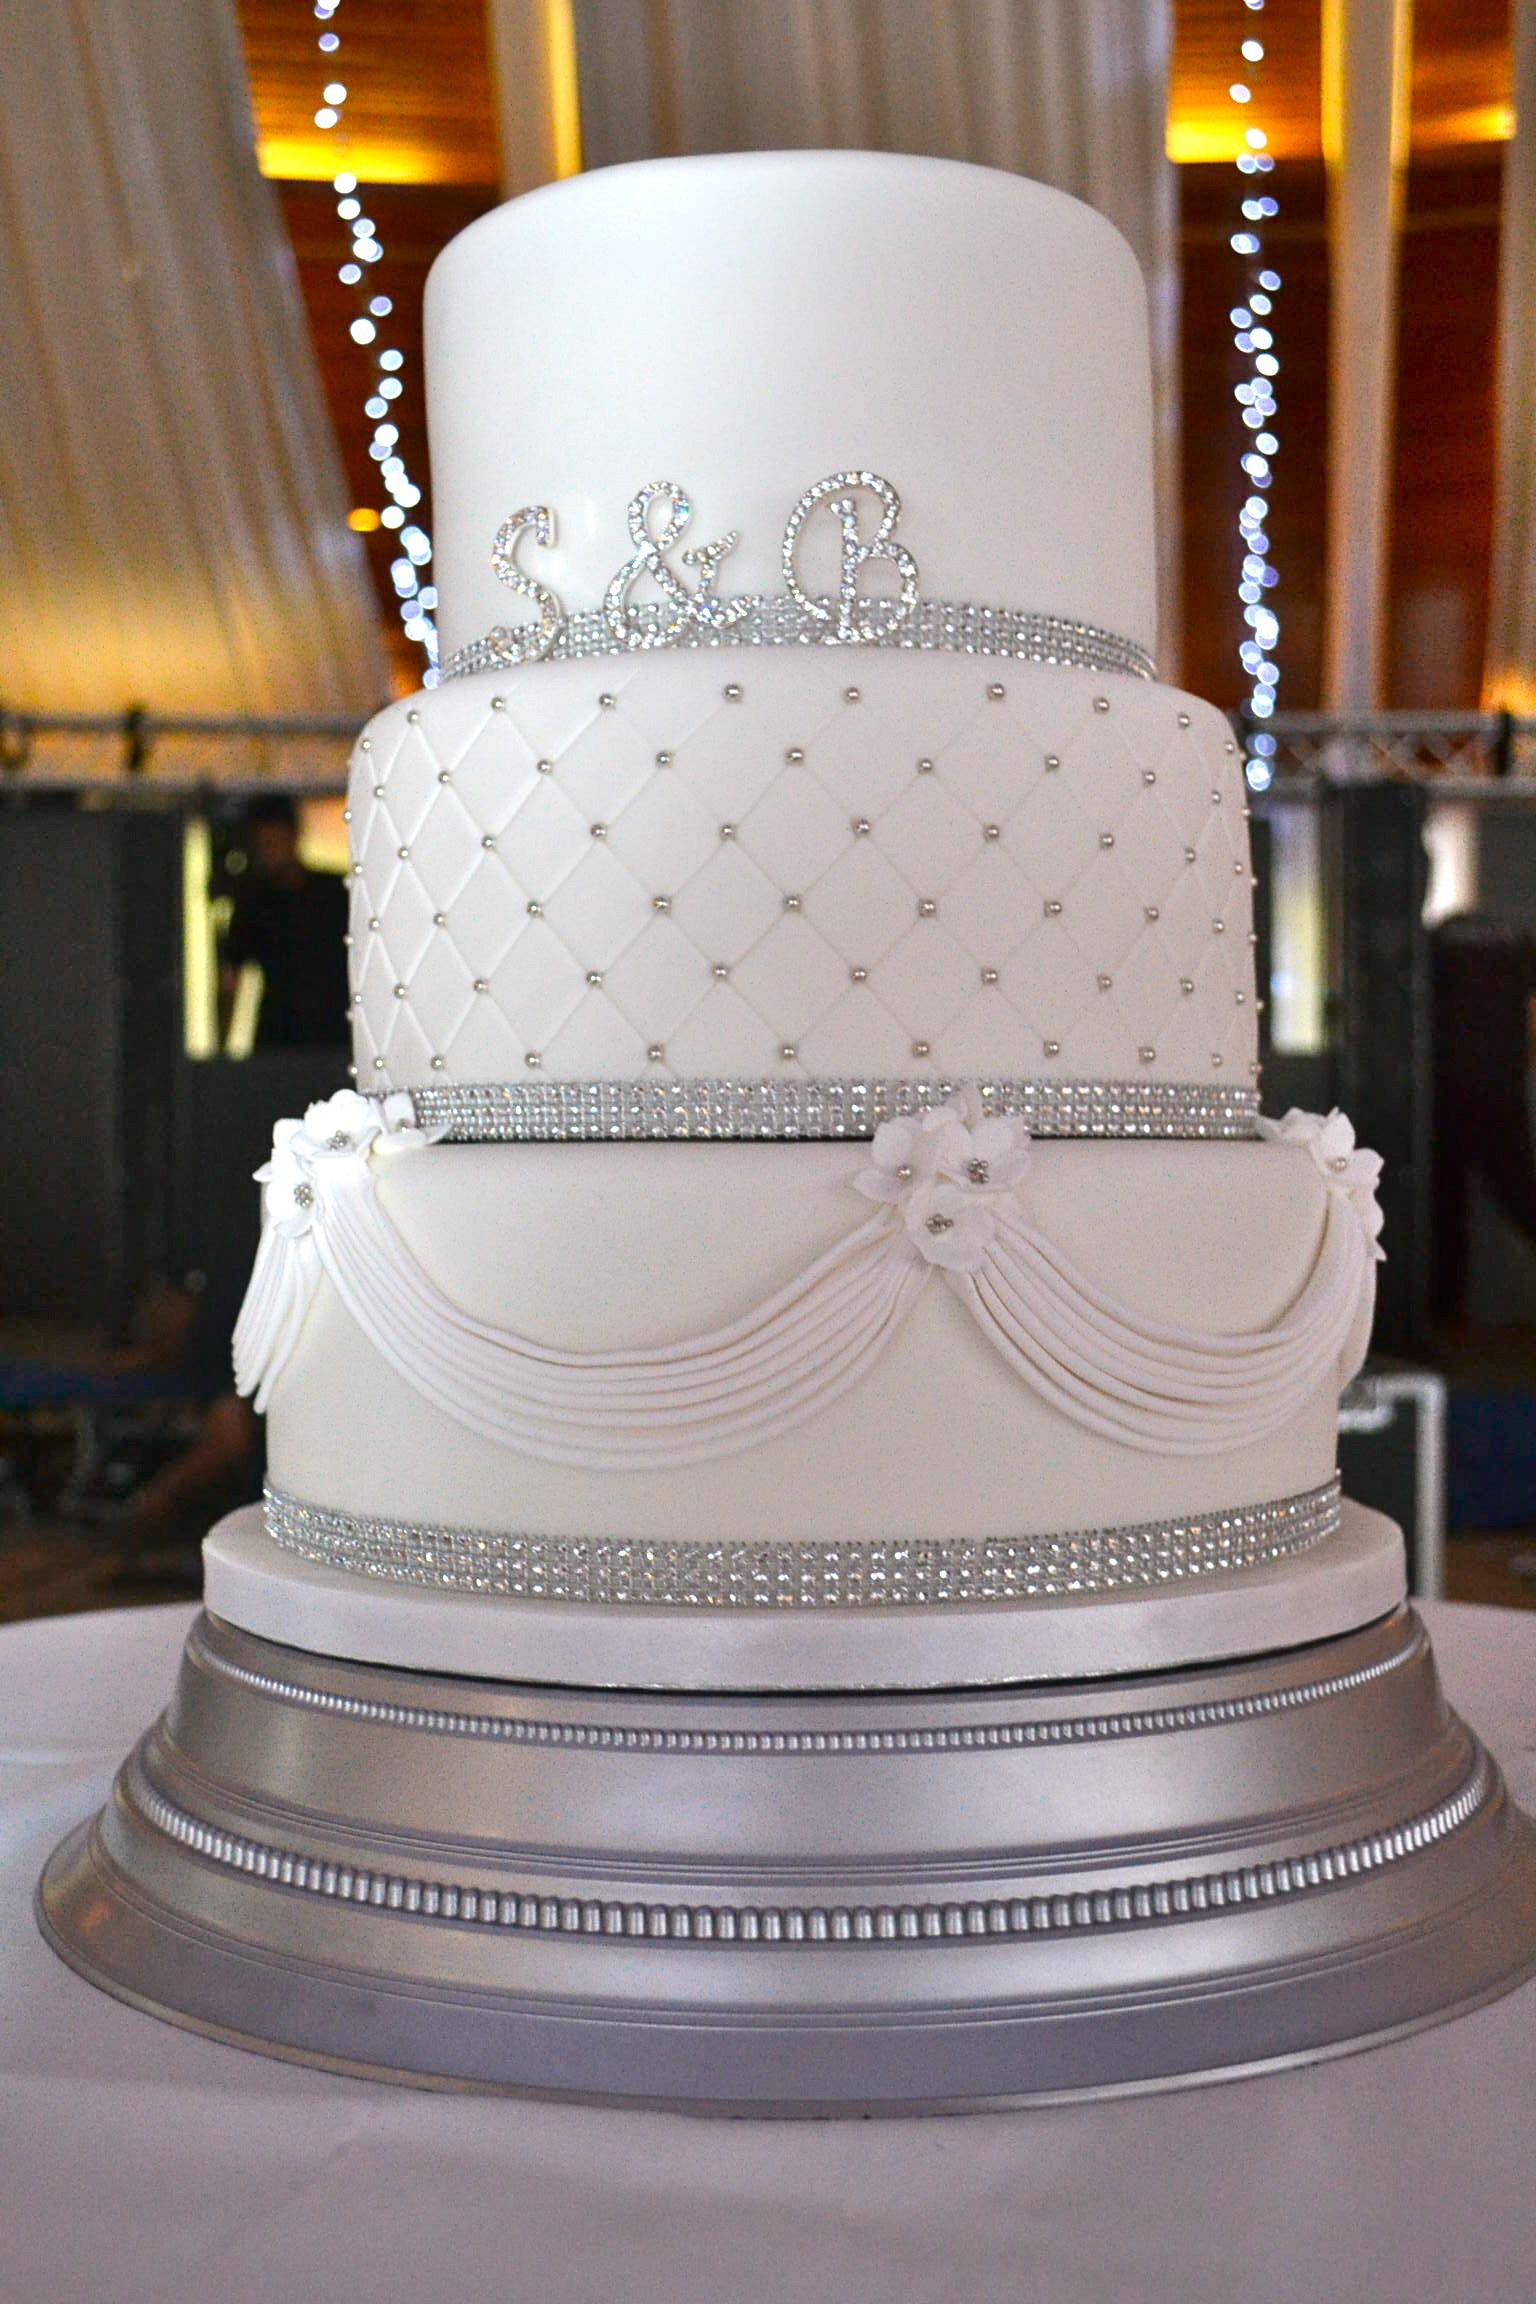 Wedding Cakes For You
 Diamante and Drapes Wedding Cake Wedding Cakes Cakeology